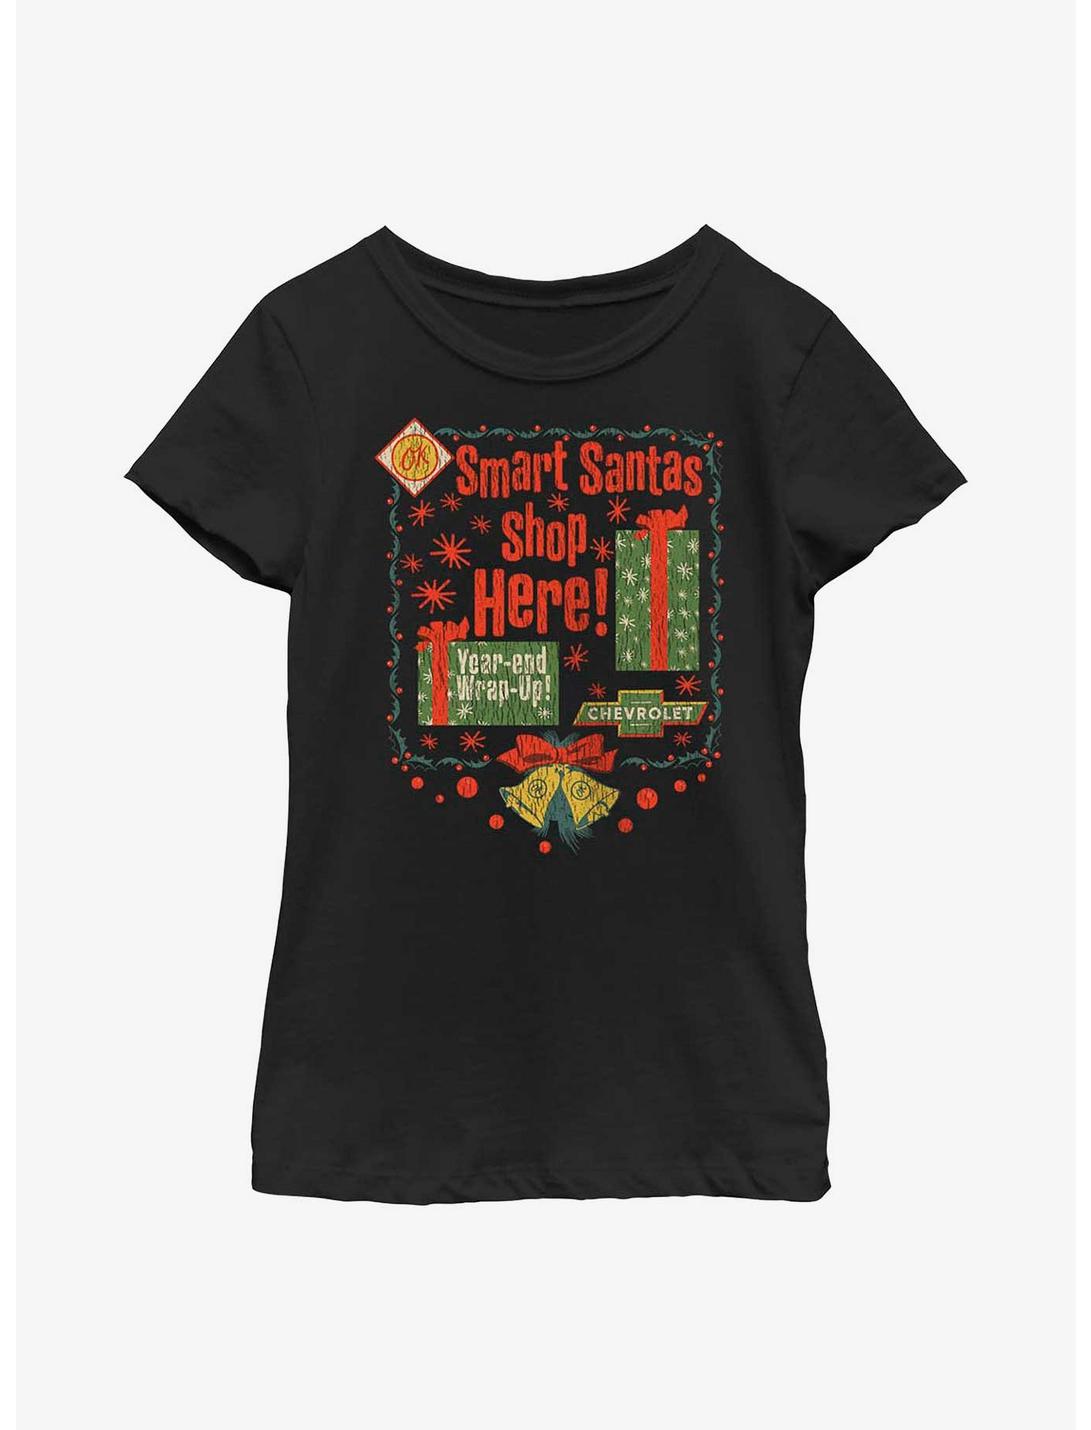 General Motors Smart Santas Shop Chevy Youth Girls T-Shirt, BLACK, hi-res